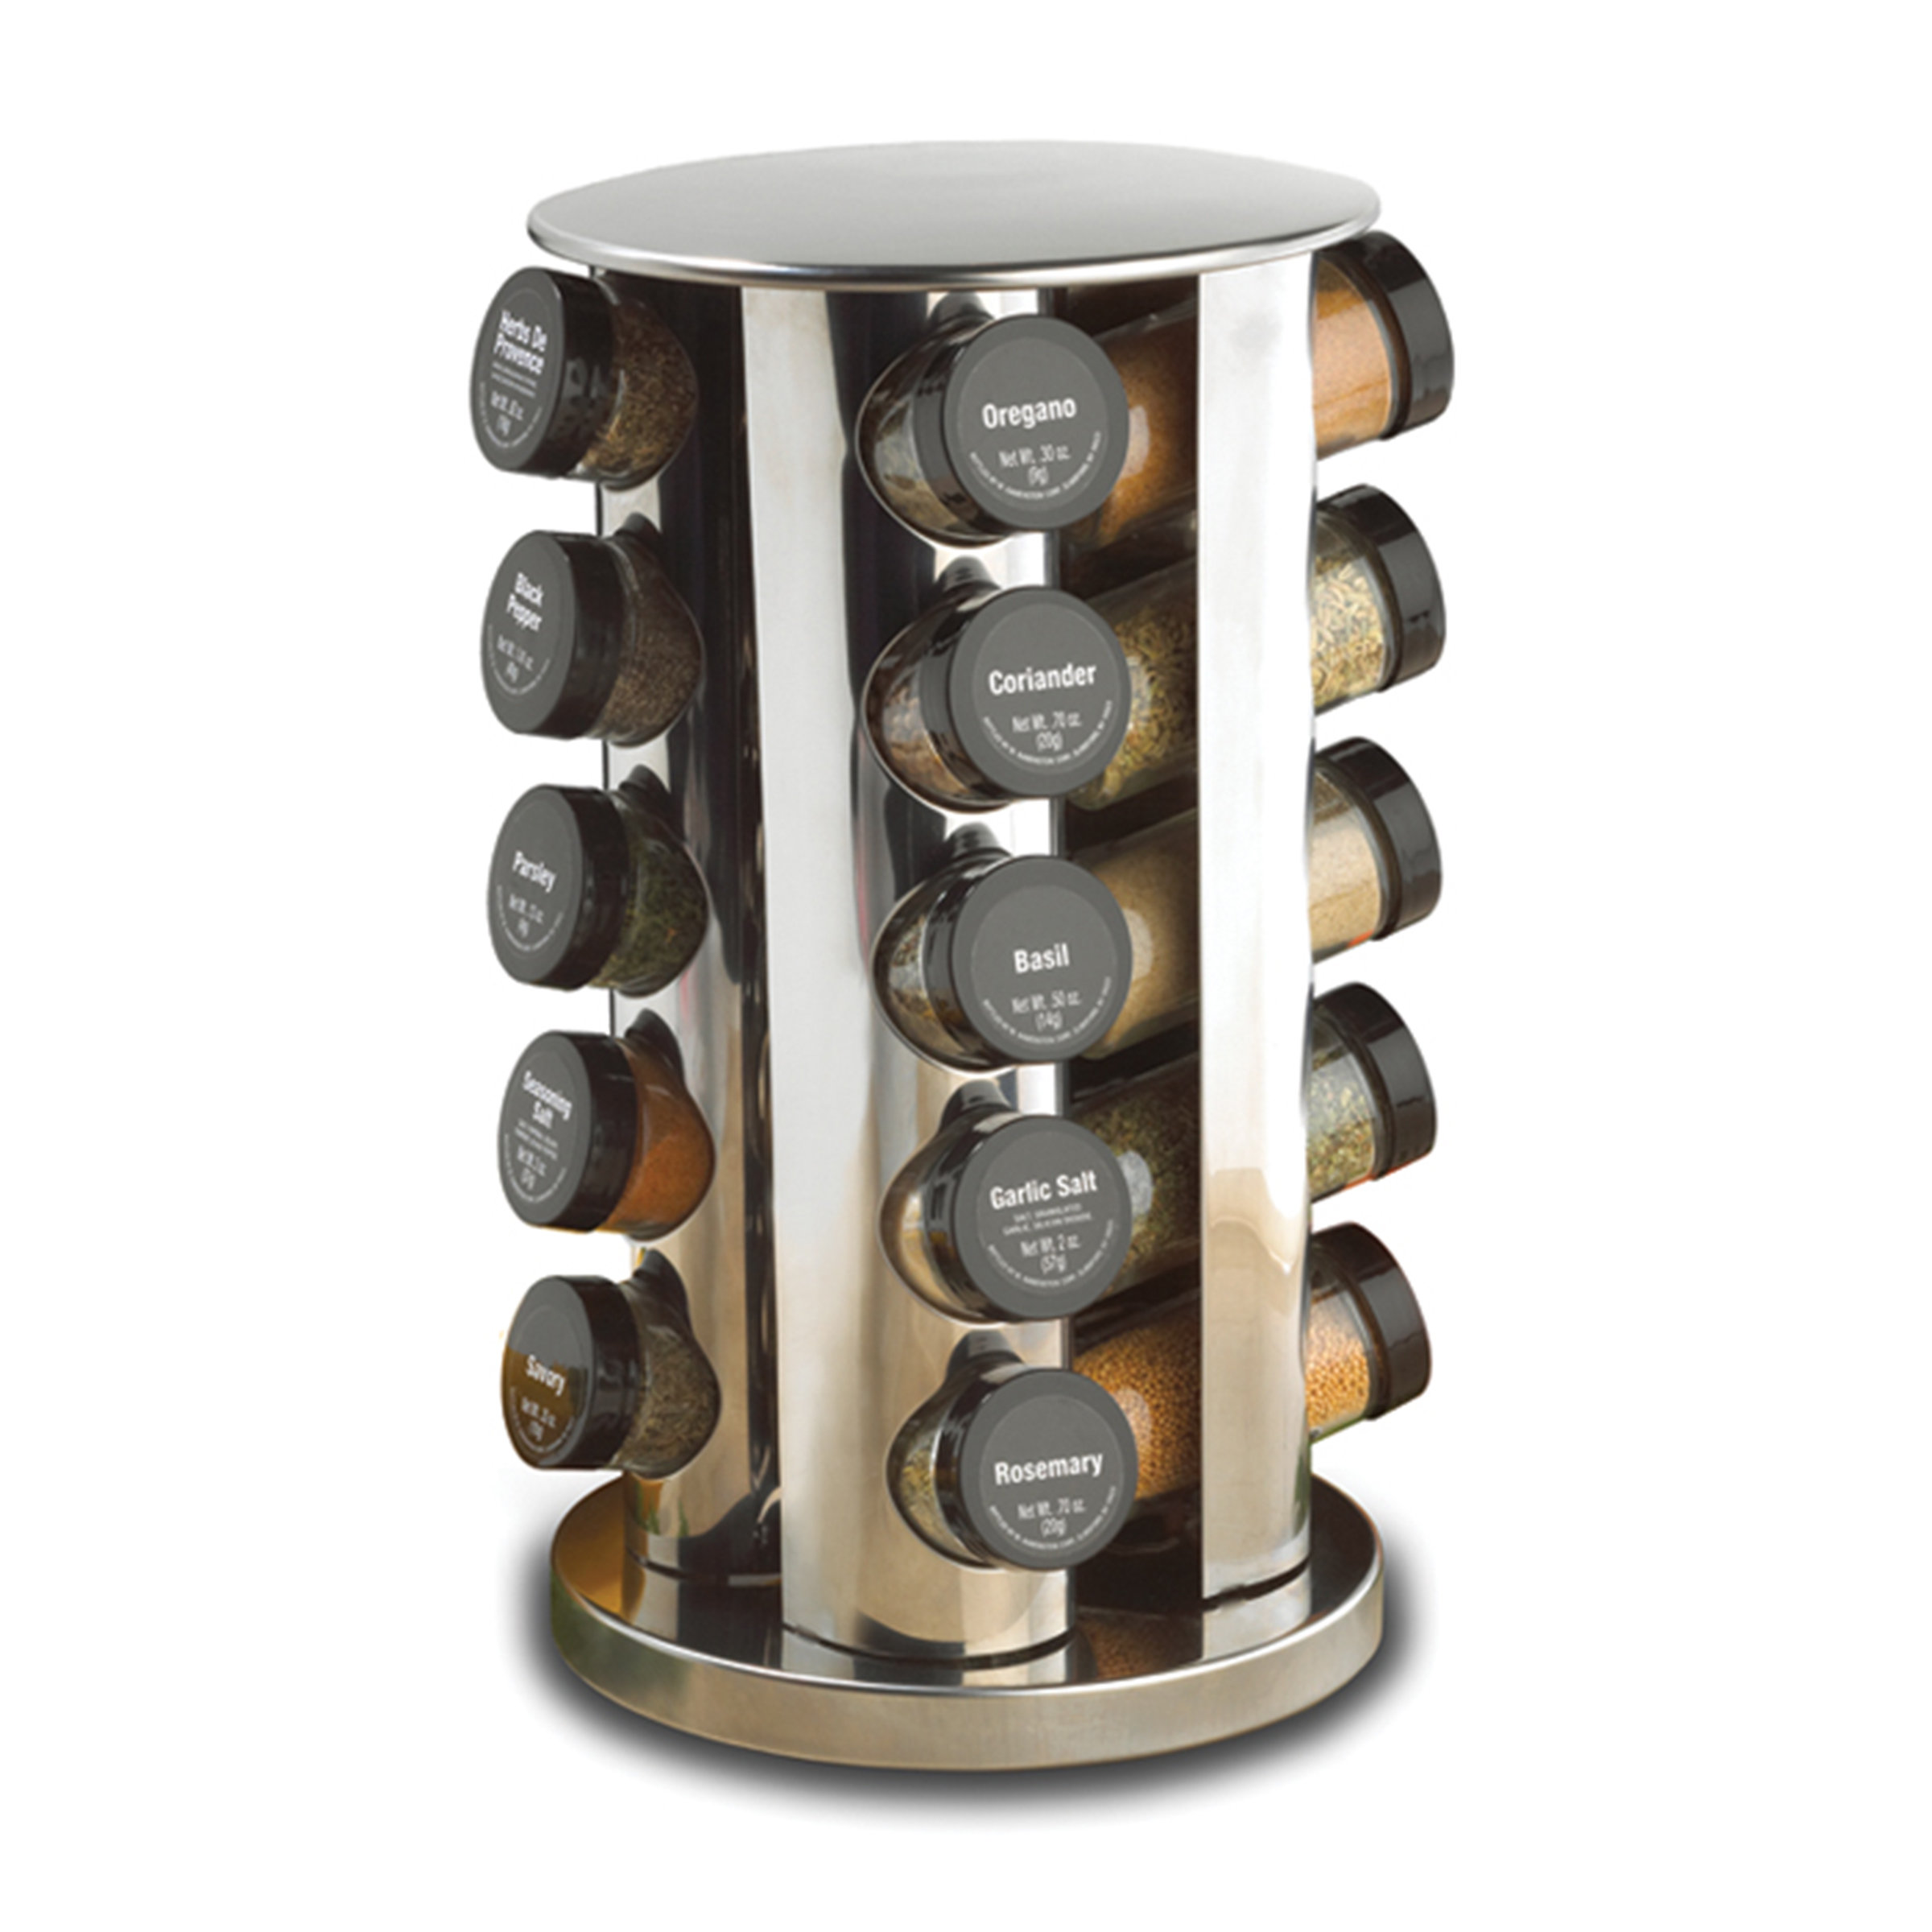 Kamenstein 20-Jar Revolving Spice Tower with Free Spice Refills (Stainless Steel Jars